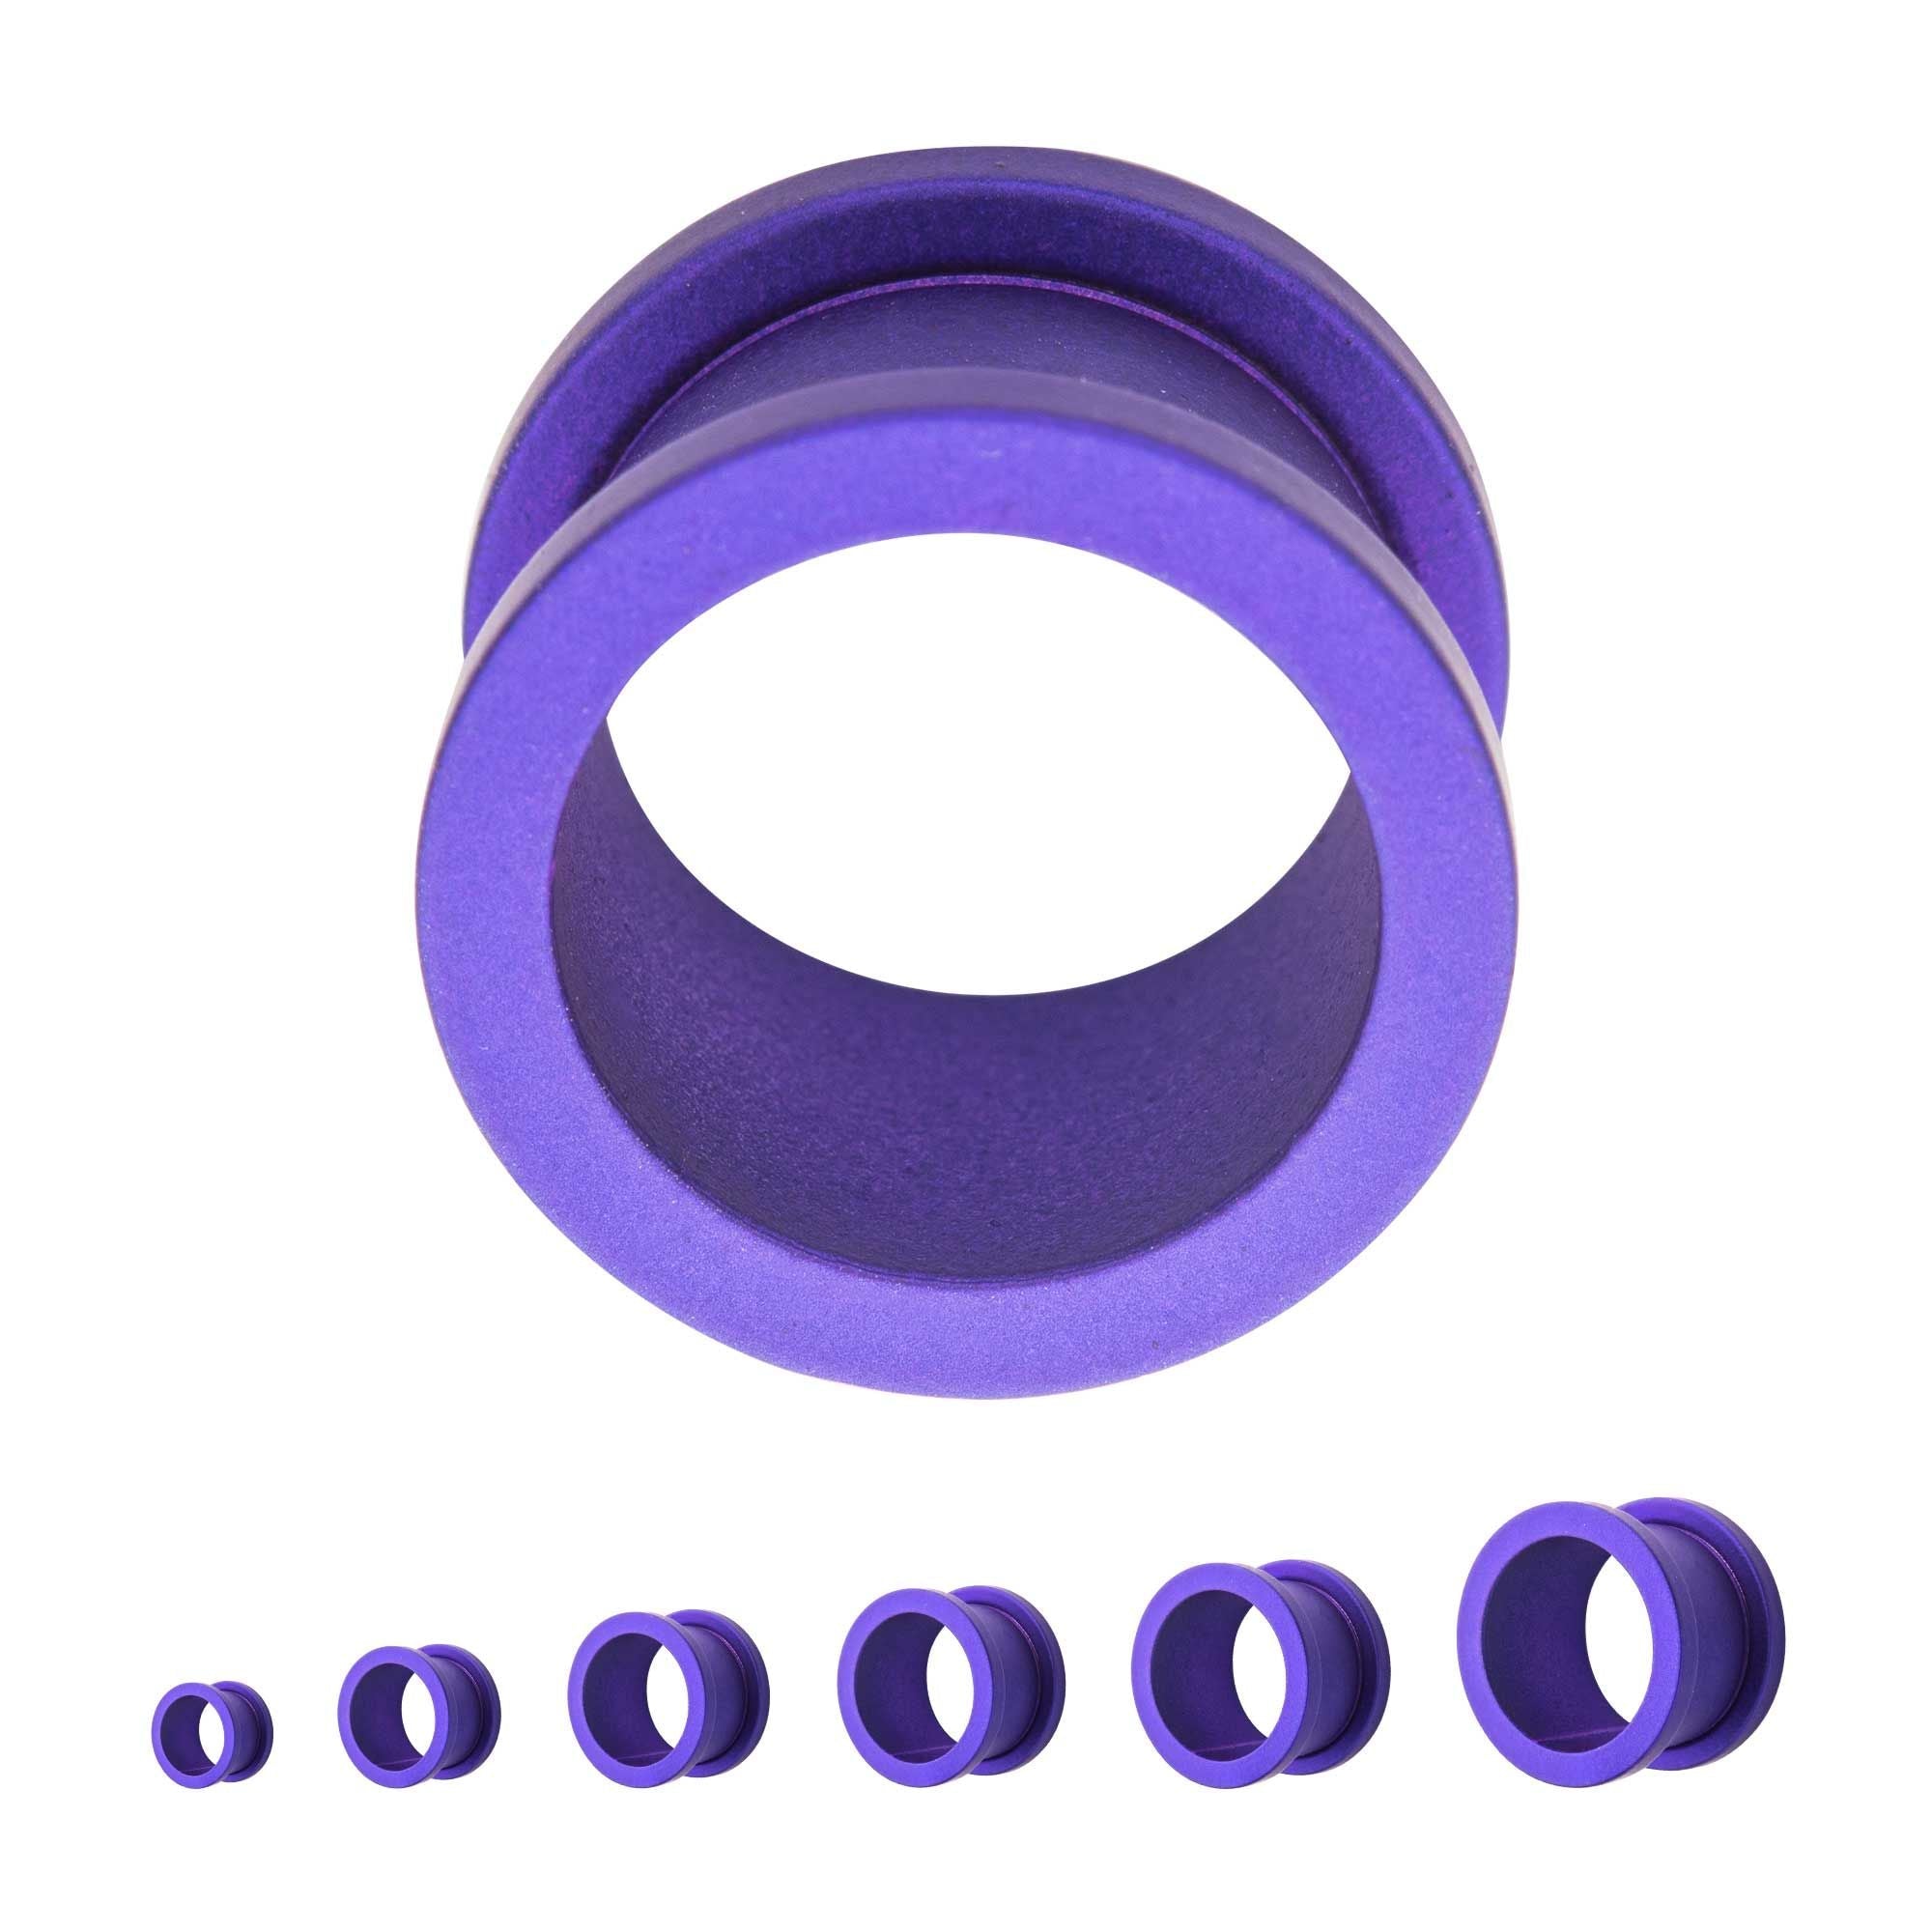 TBD-Plugs Purple Silicone Coated Screw Fit Plug -Rebel Bod-RebelBod